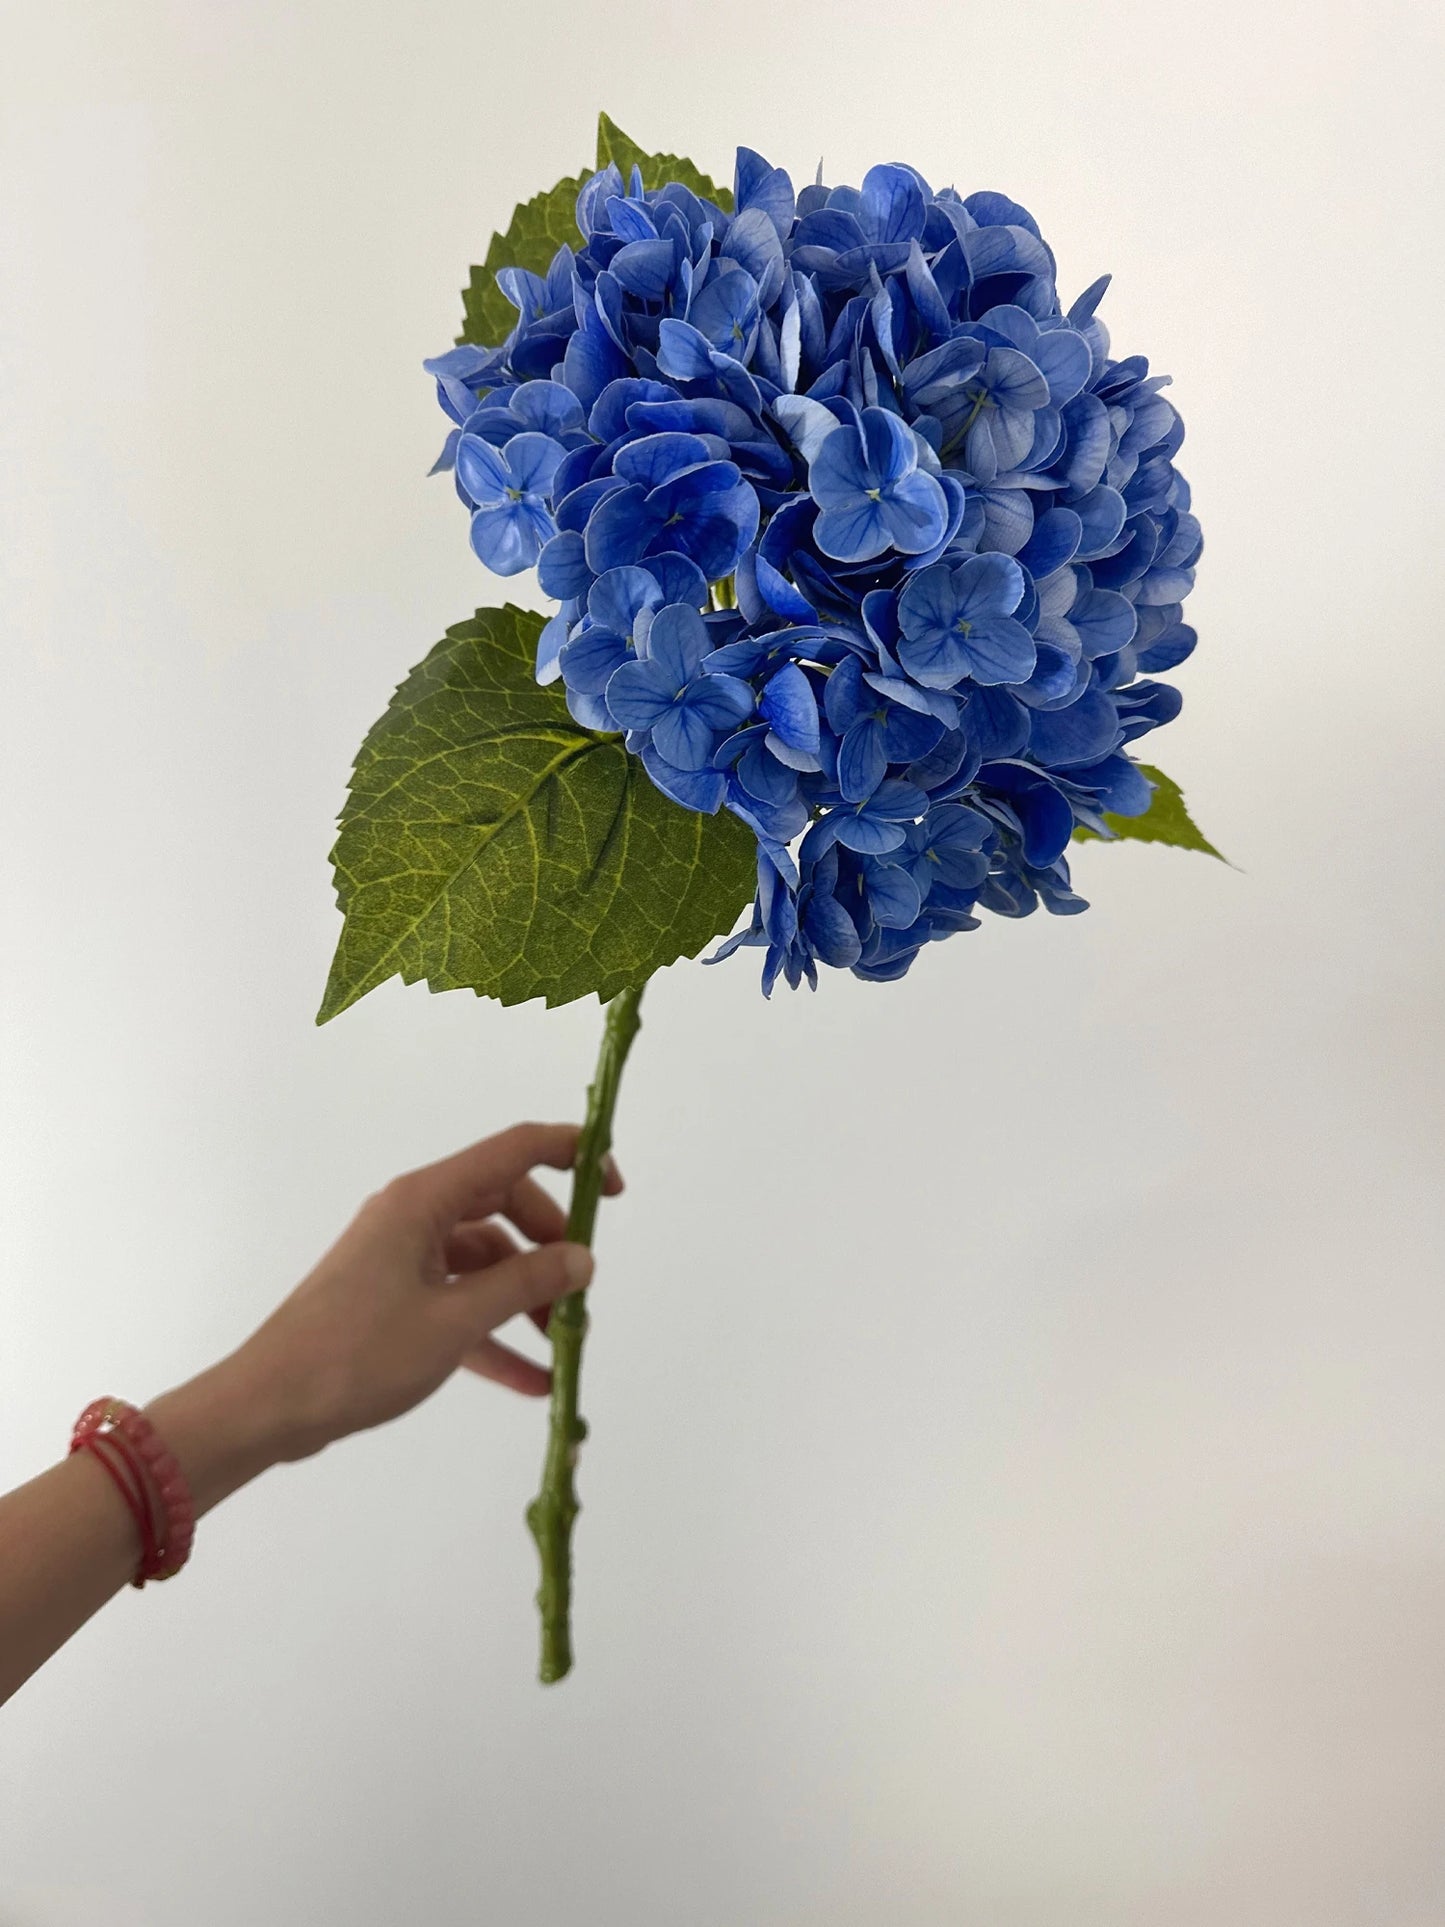 Blue Artificial Flowers